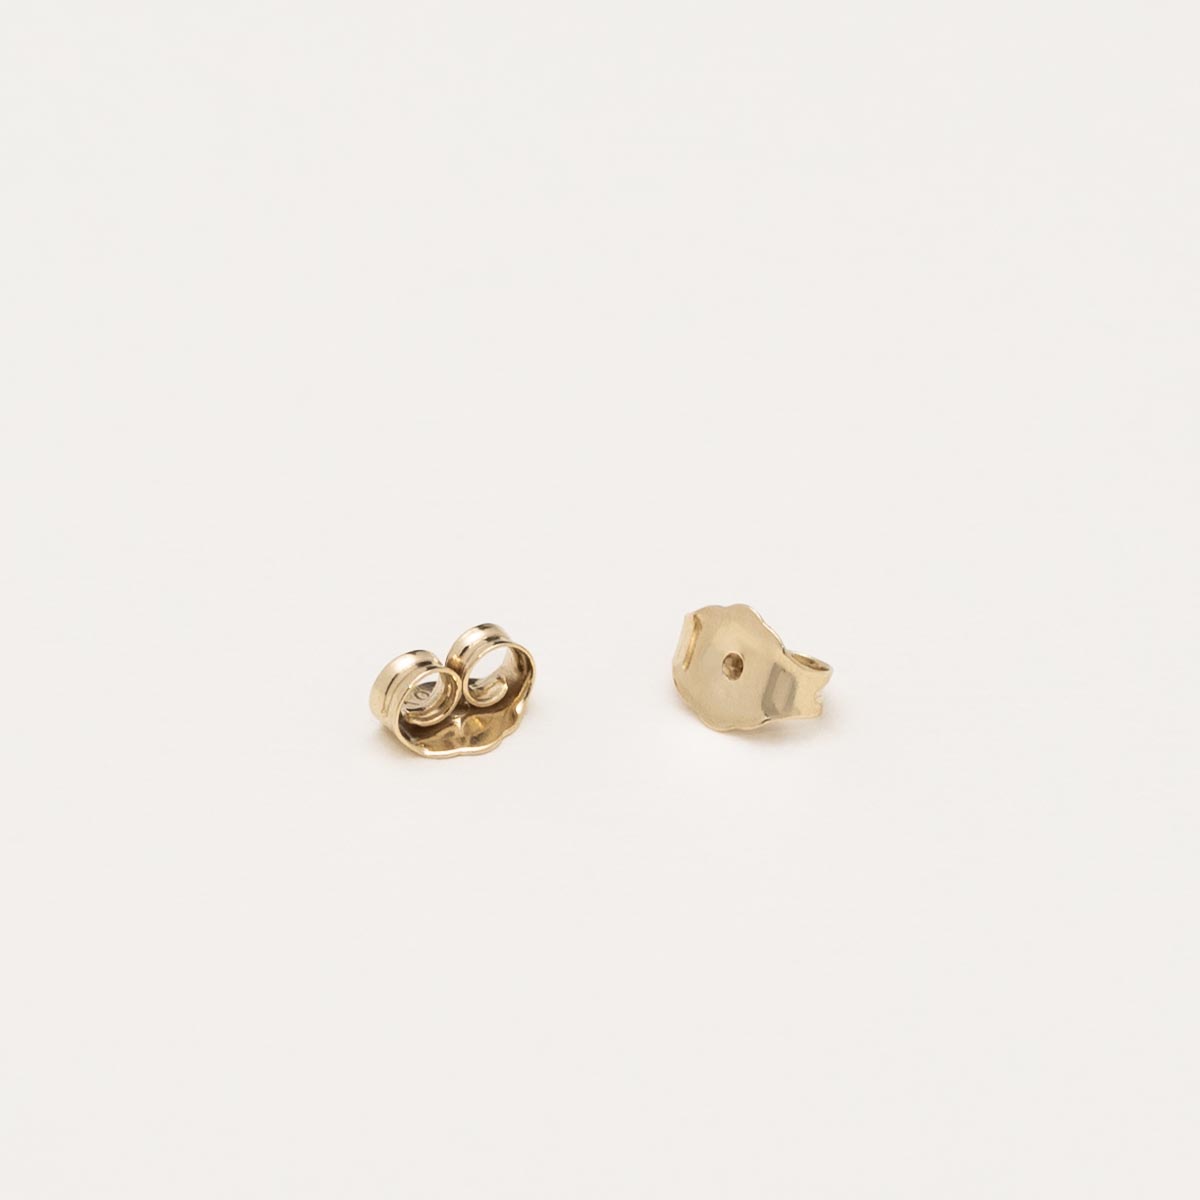 Diamond Petite Fashion Earrings in 10kt Yellow Gold (1/10ct tw)